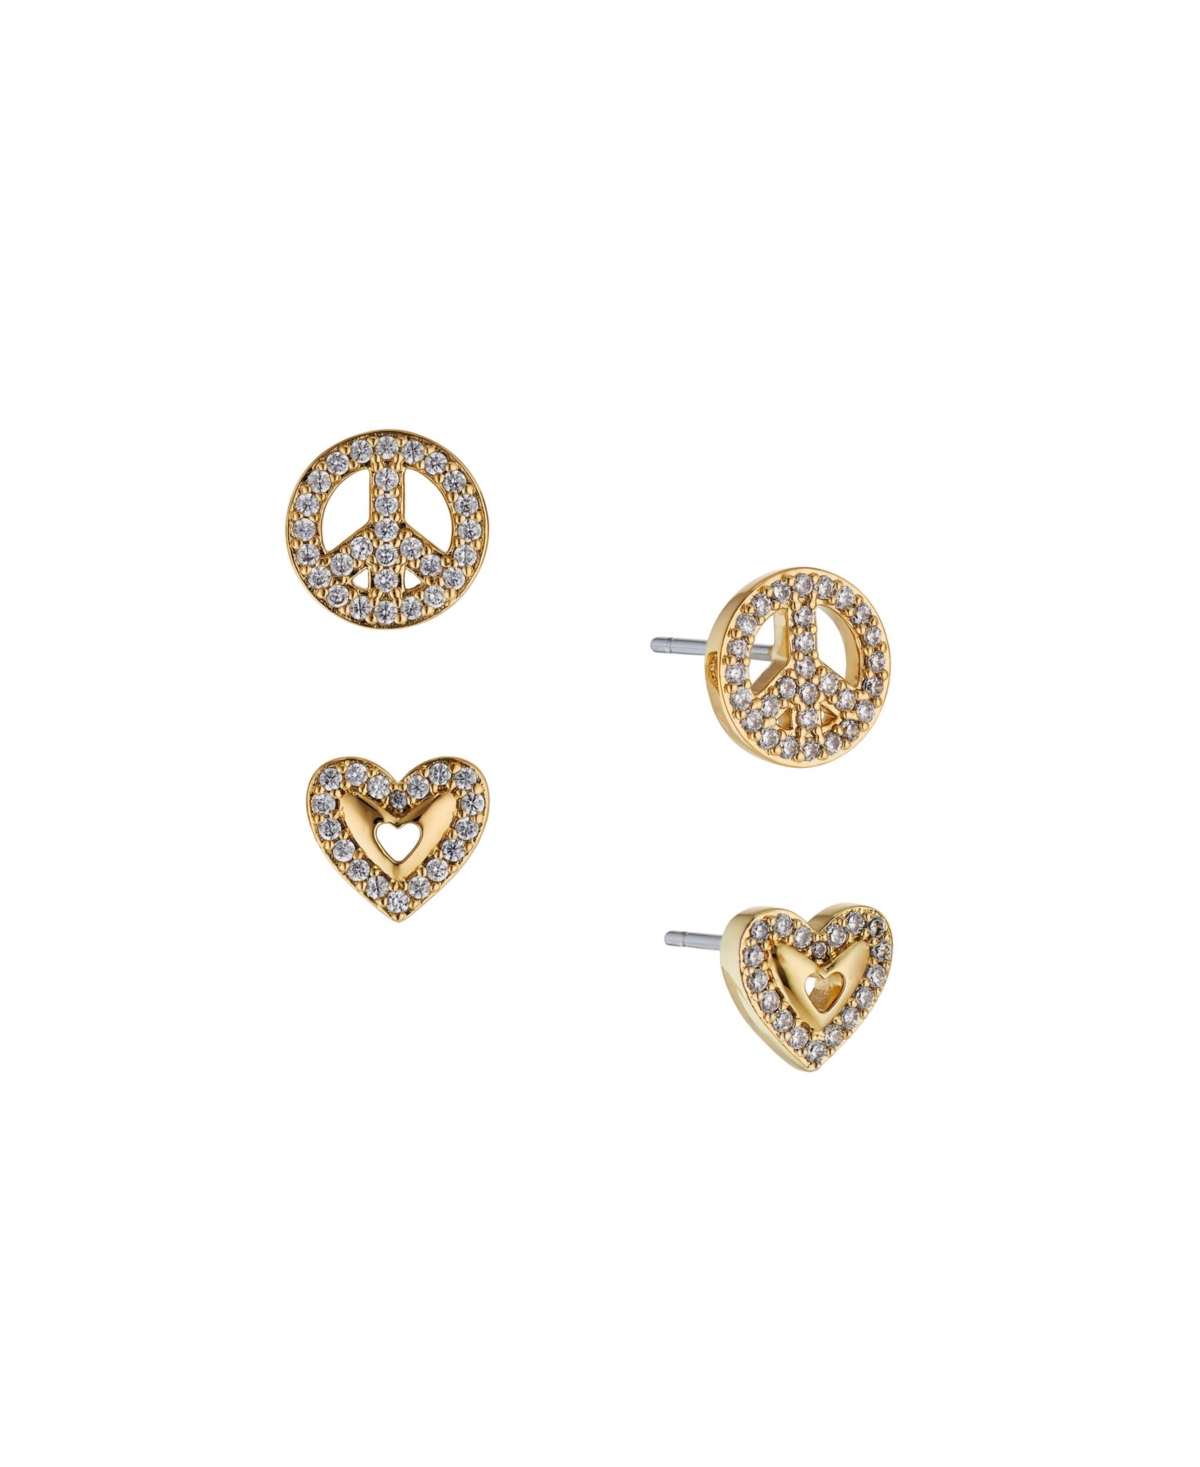 Women's Peace Heart Earring Set, 2 Piece - Gold-Plated